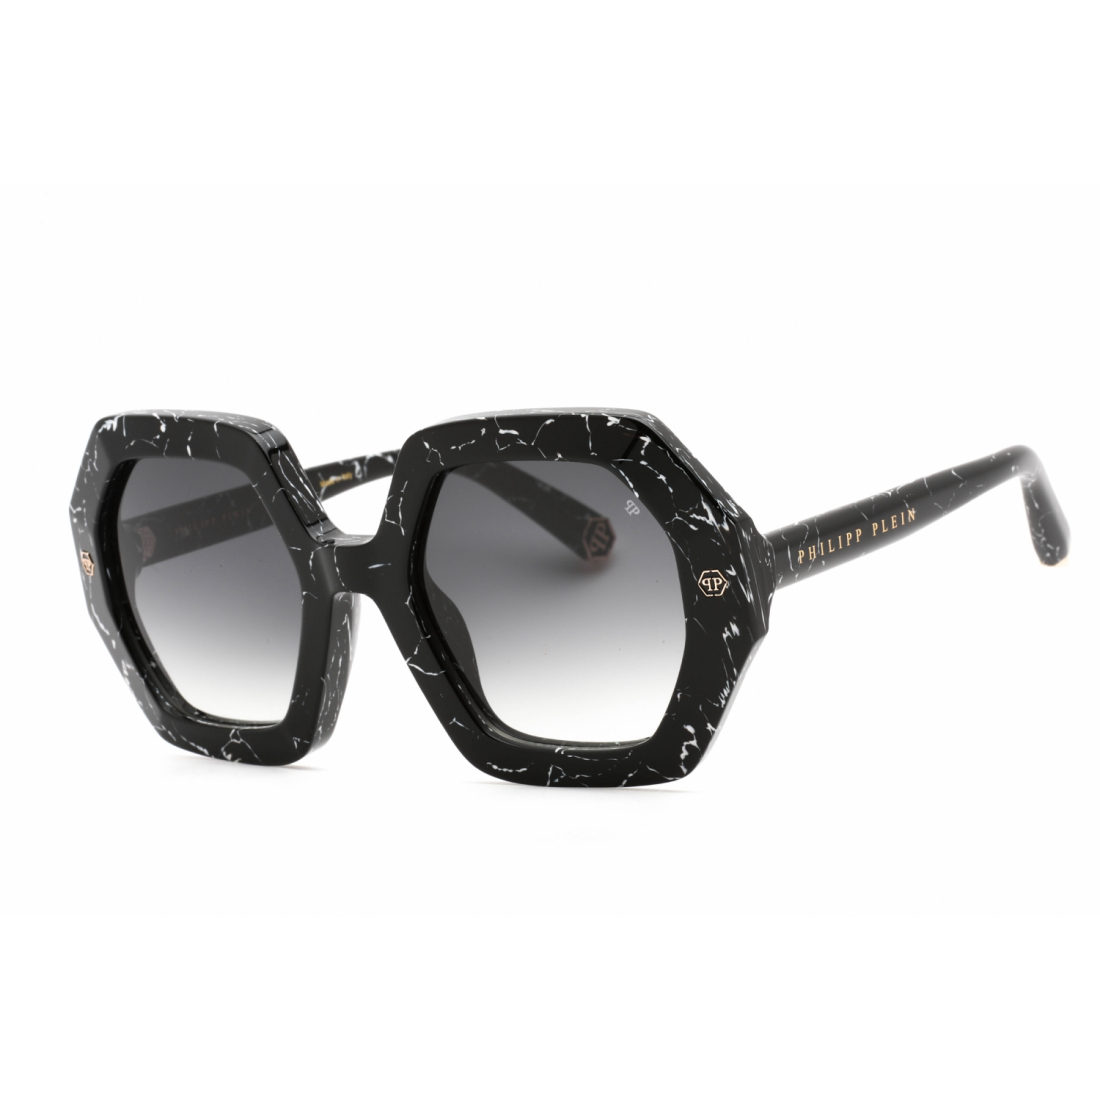 Women's 'SPP039M' Sunglasses